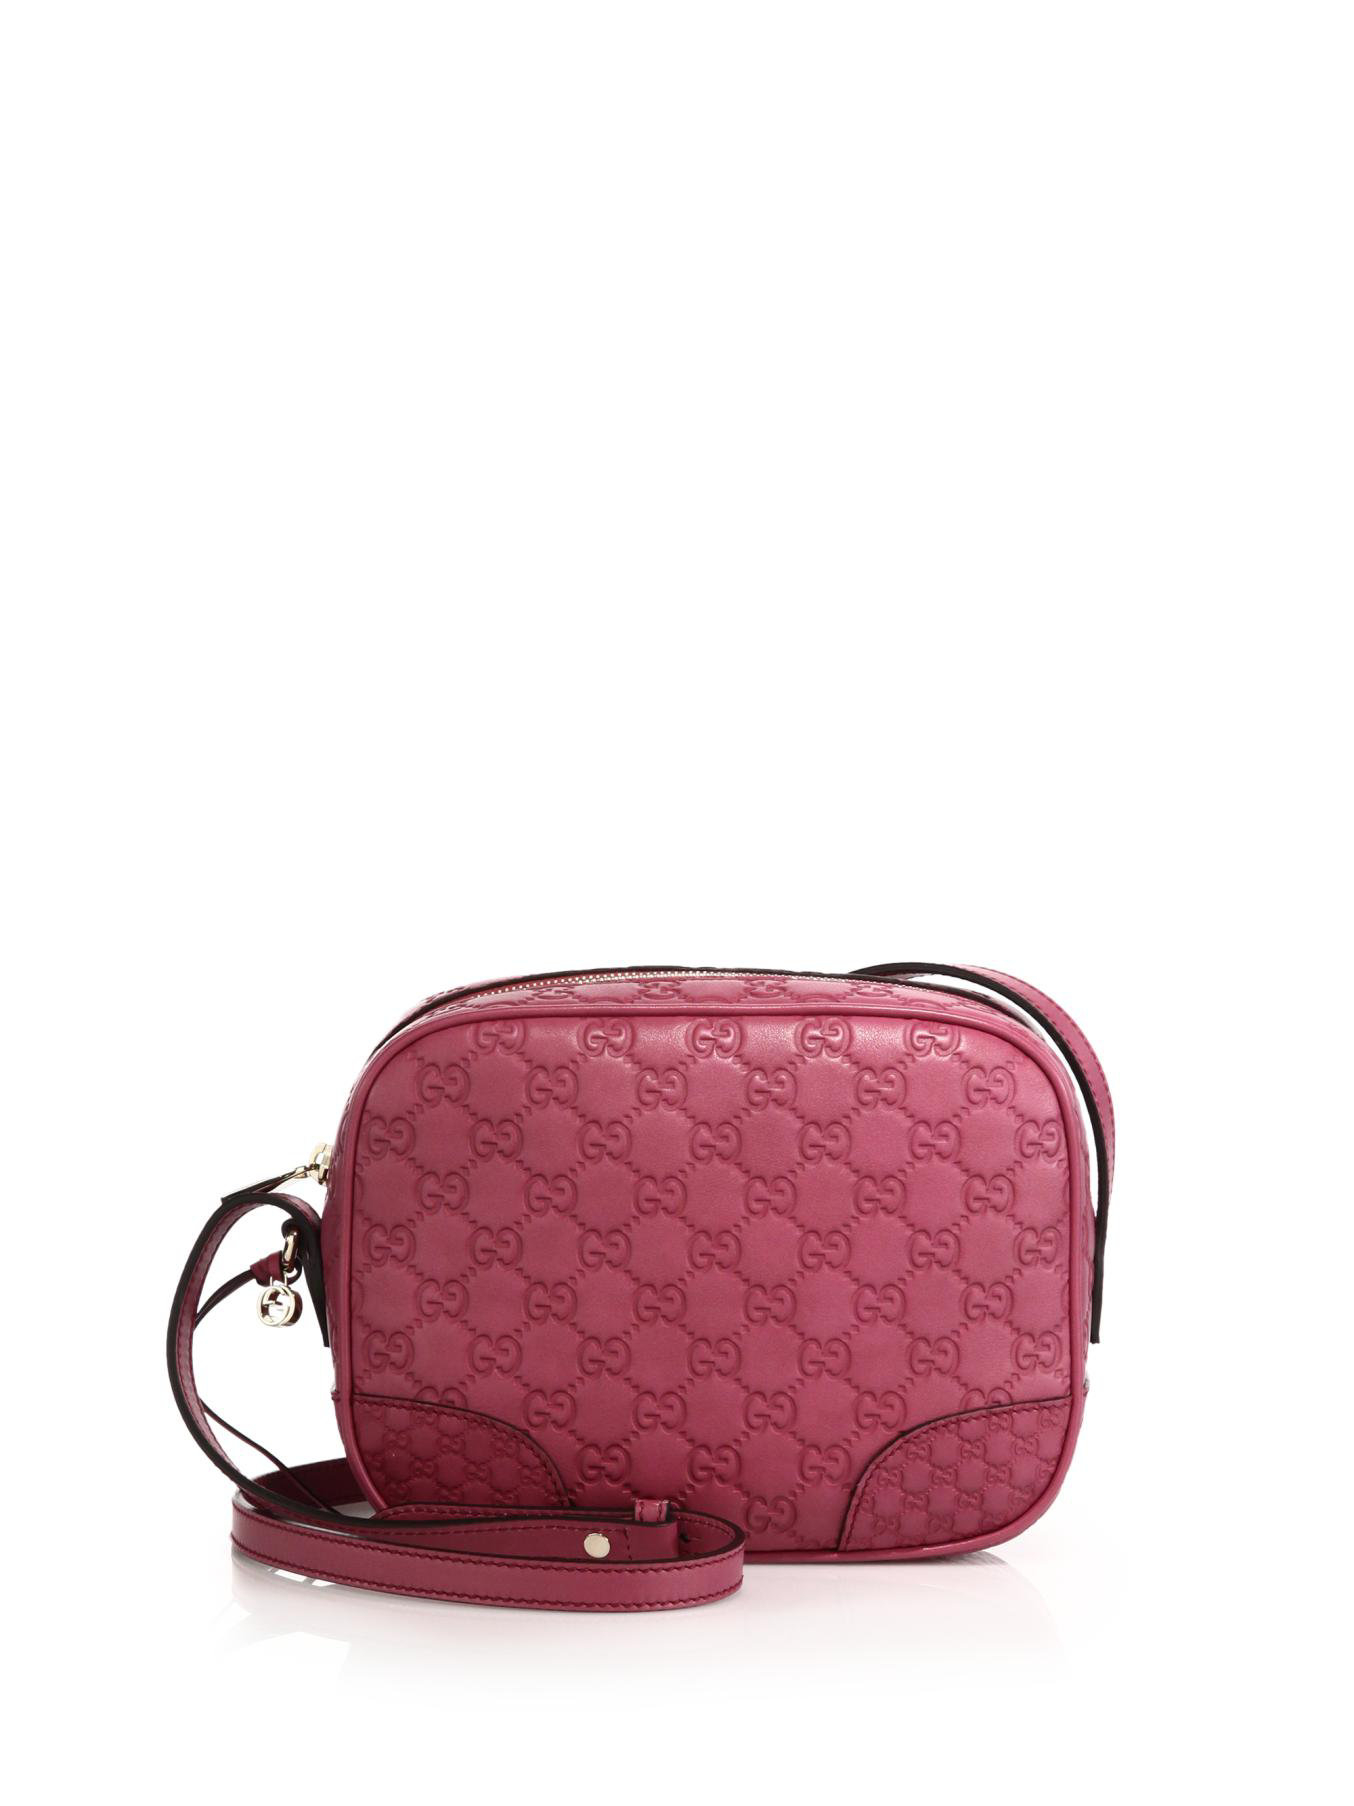 Gucci Bree Ssima Mini Leather Disco Bag in Pink - Lyst